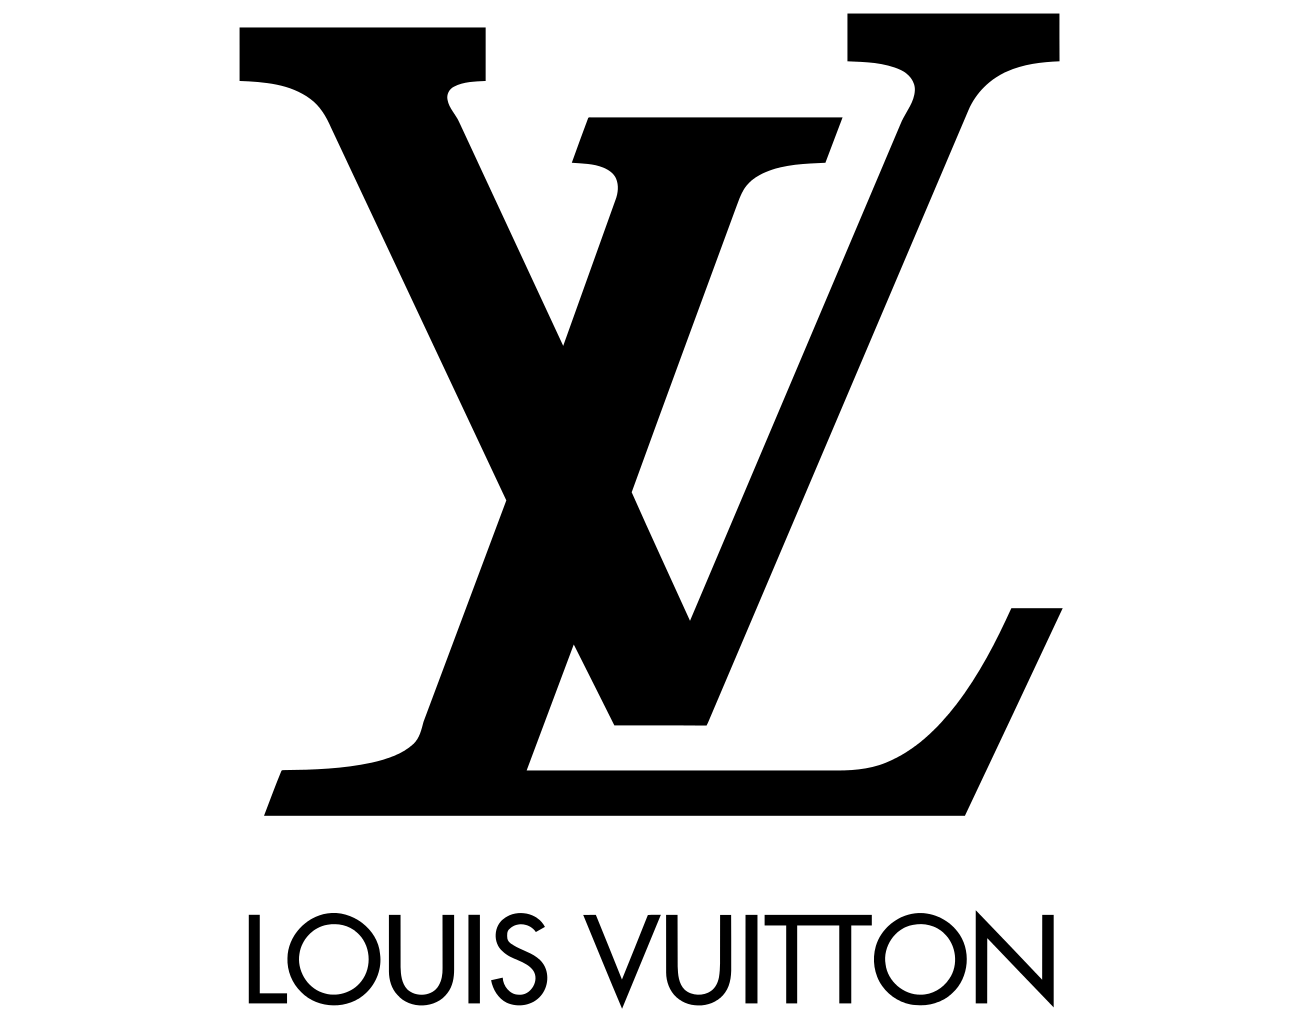 Gold Louis Vuitton Logo - Louis Vuitton Logo, Louis Vuitton Symbol Meaning, History and Evolution